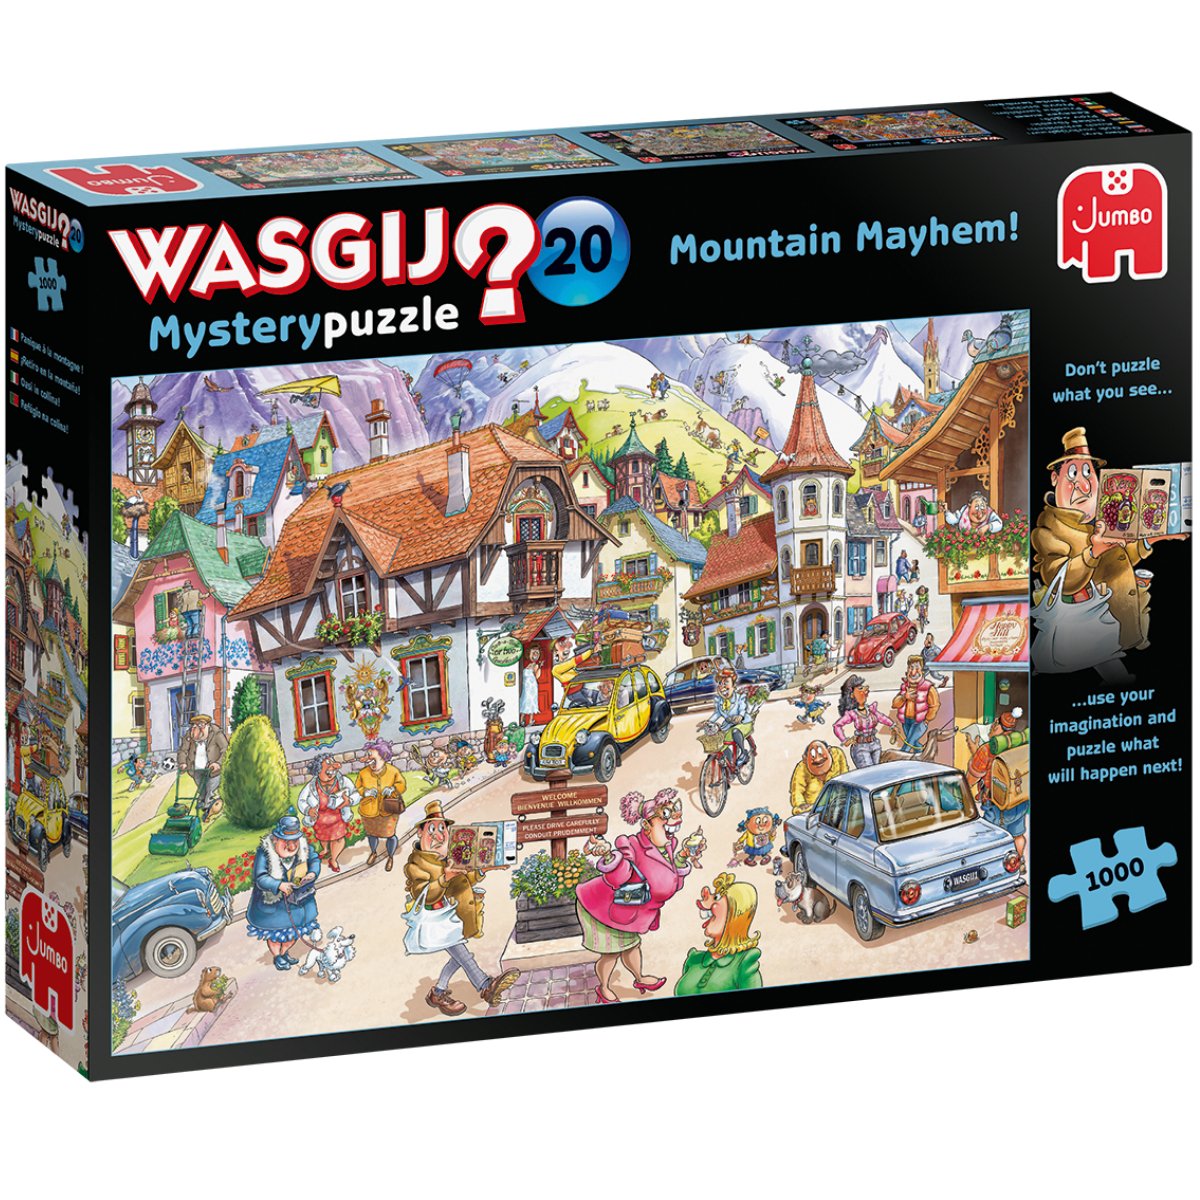 Wasgij Mystery 20 Mountain Mayhem! 1000 Piece Jigsaw Puzzle - Phillips Hobbies